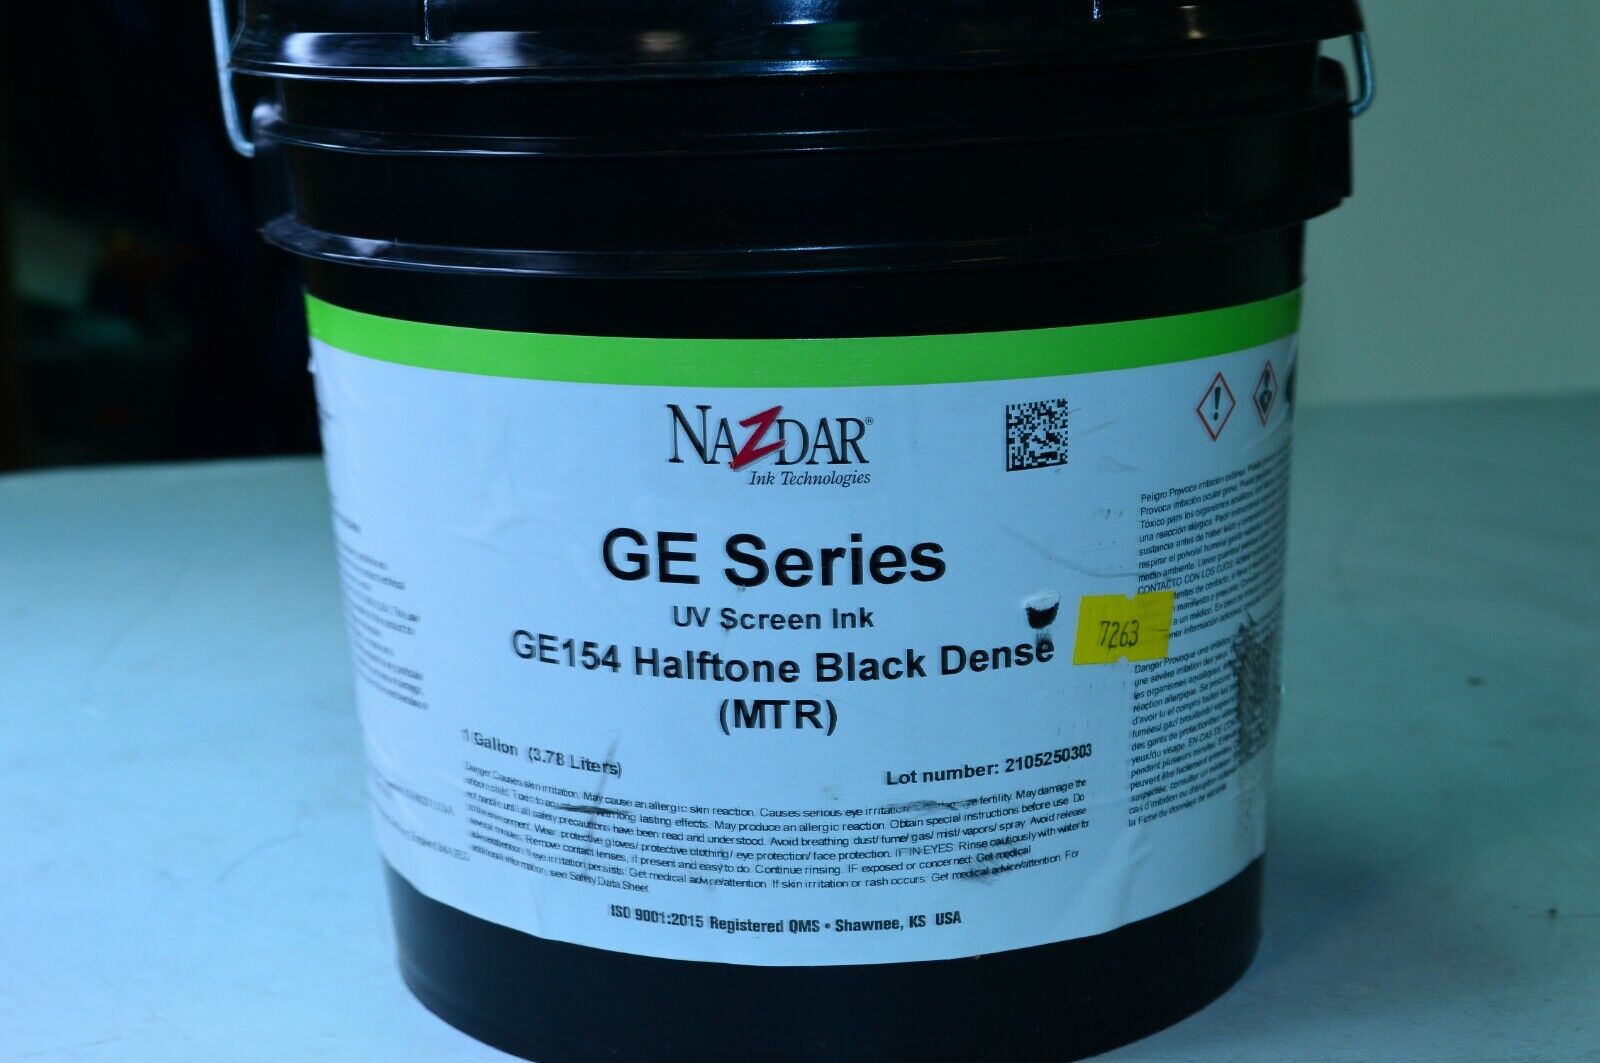 Nazdar Ink Technologies Ge Series Uv Screen Ink Ge154 Halftone Black Dense 1g